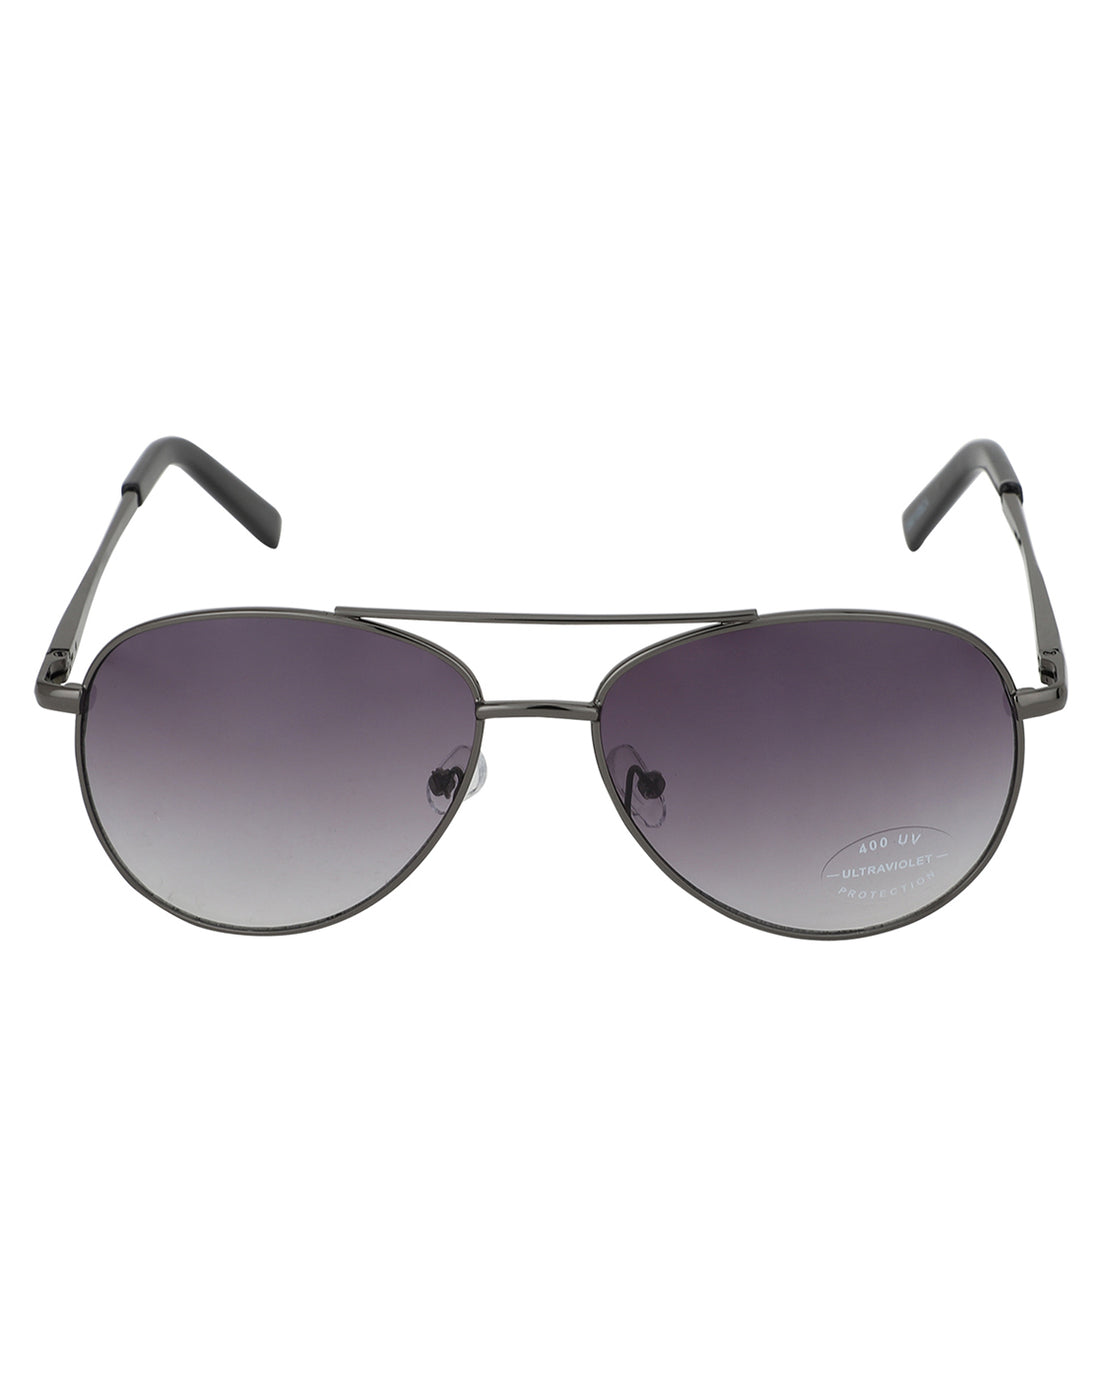 Carlton London Grey Aviator Sunglasses with UV Protected Lens For Men